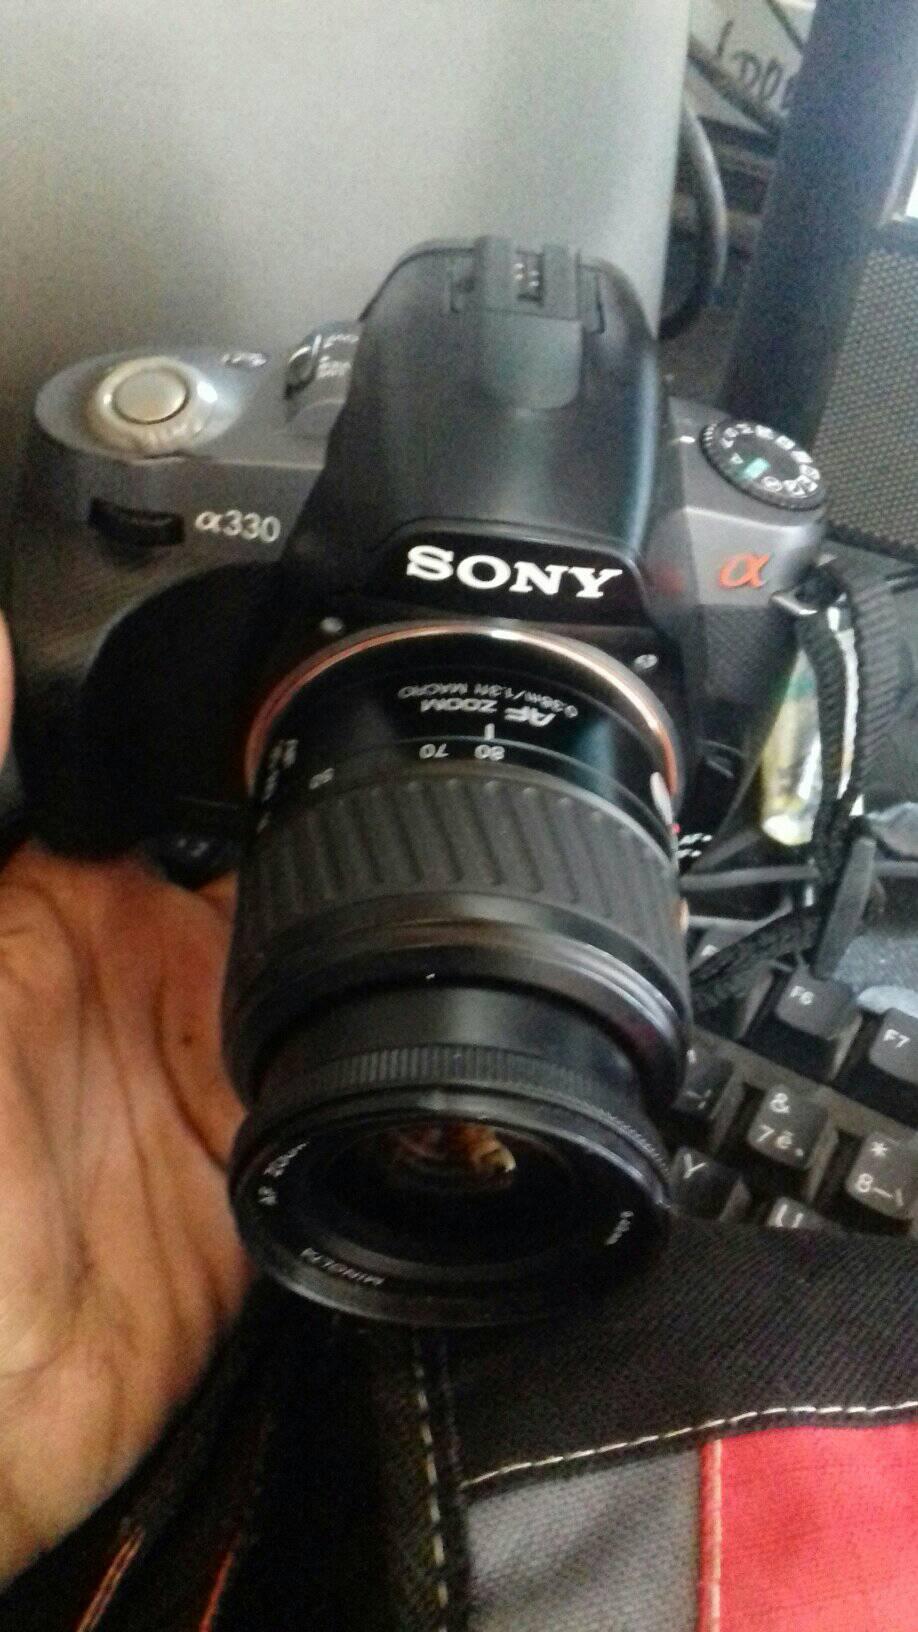 Appareil Photo Sony alpha 330  spécial photo +35-80mm Disponible